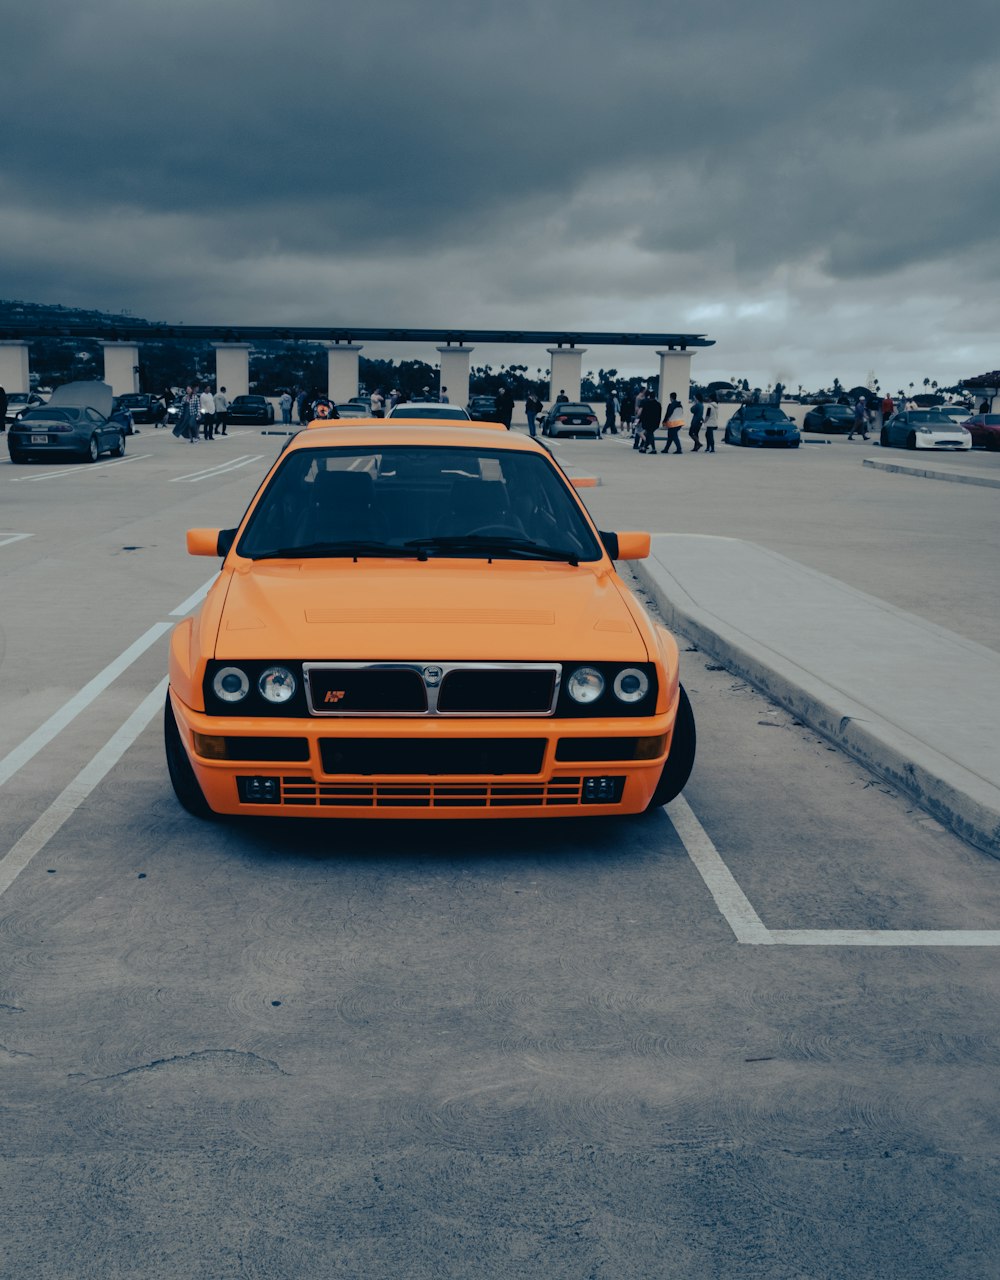 an orange car parked in a parking lot